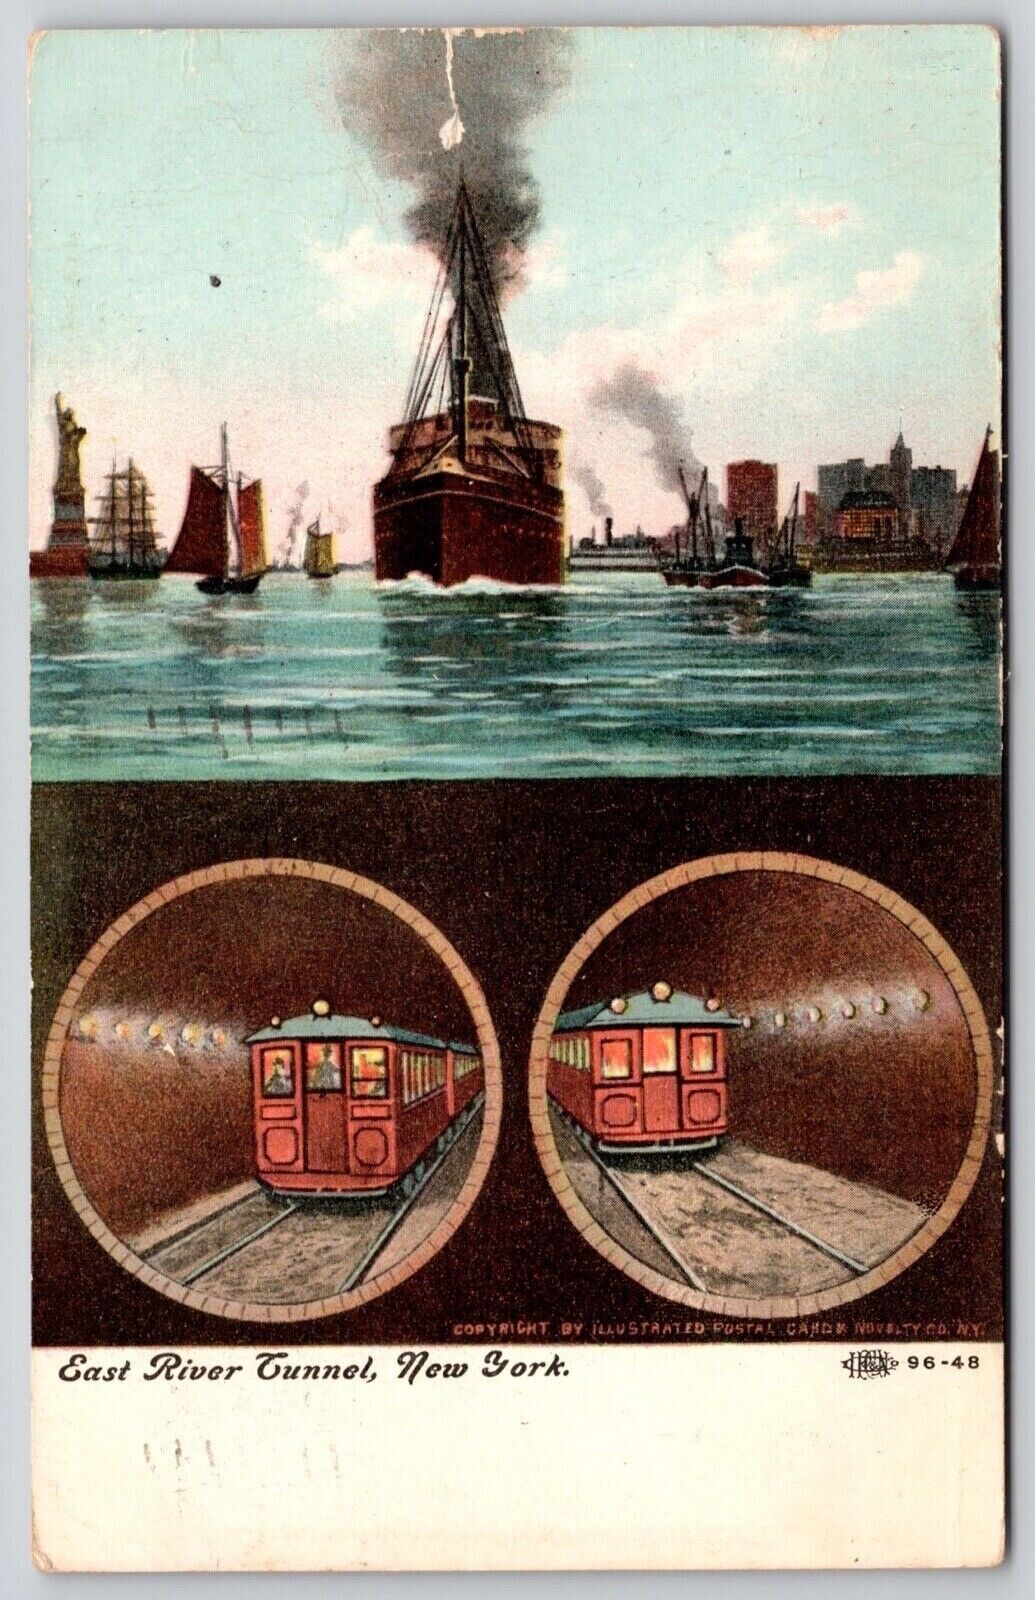 New York East River Tunnel Multi View Boats Trains Railroad Cancel 1908 Postcard